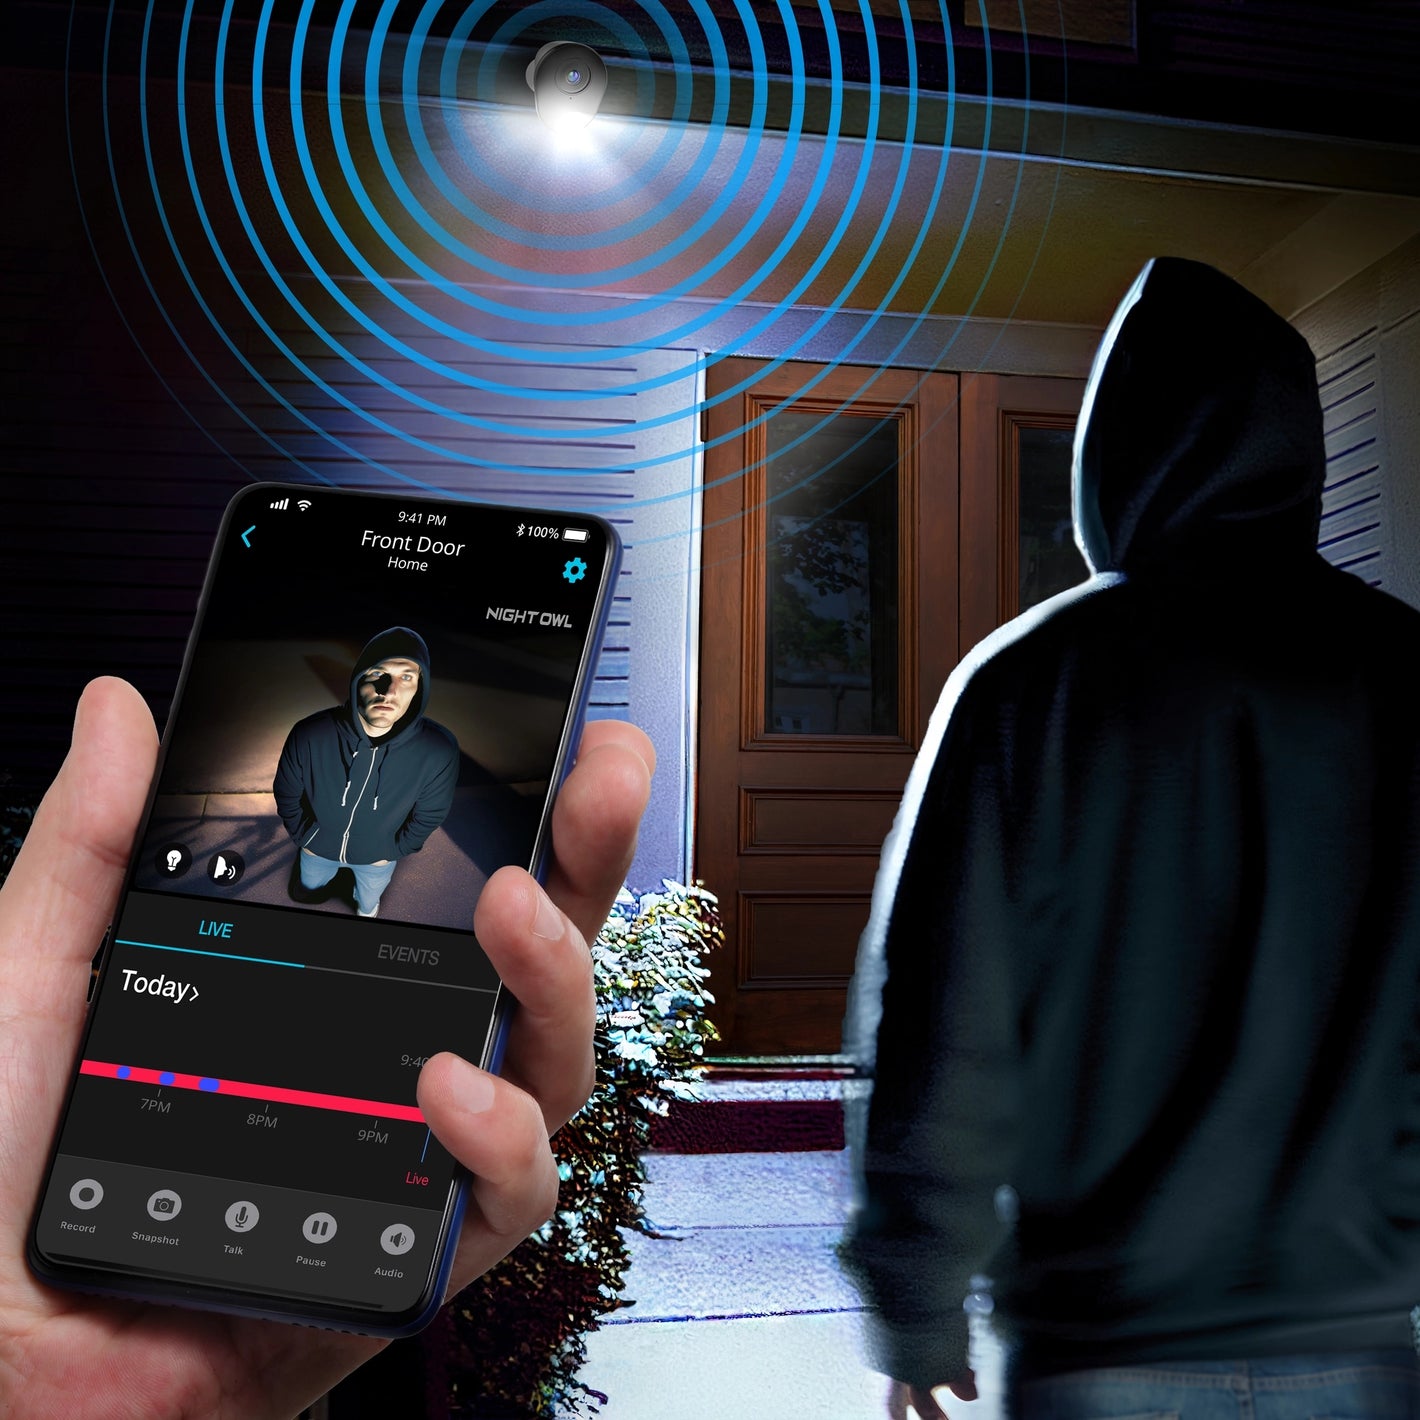 NVR app alert and outside siren deterring possible intruder